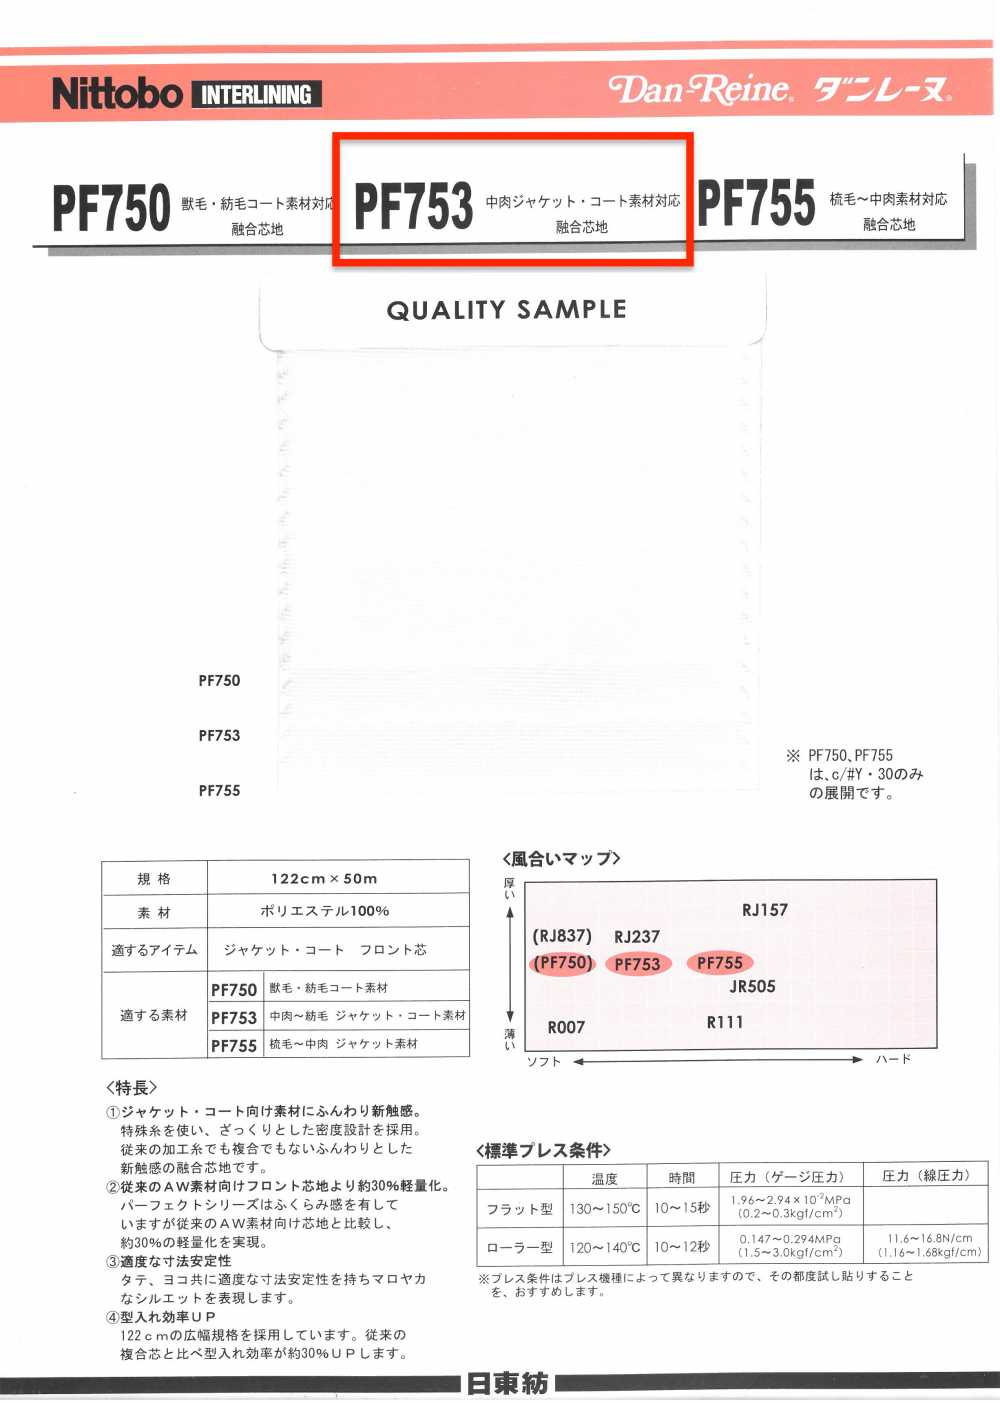 PF753 ダンレーヌ 中肉ジャケット・コート素材対応融合芯地 75D 日東紡インターライニング